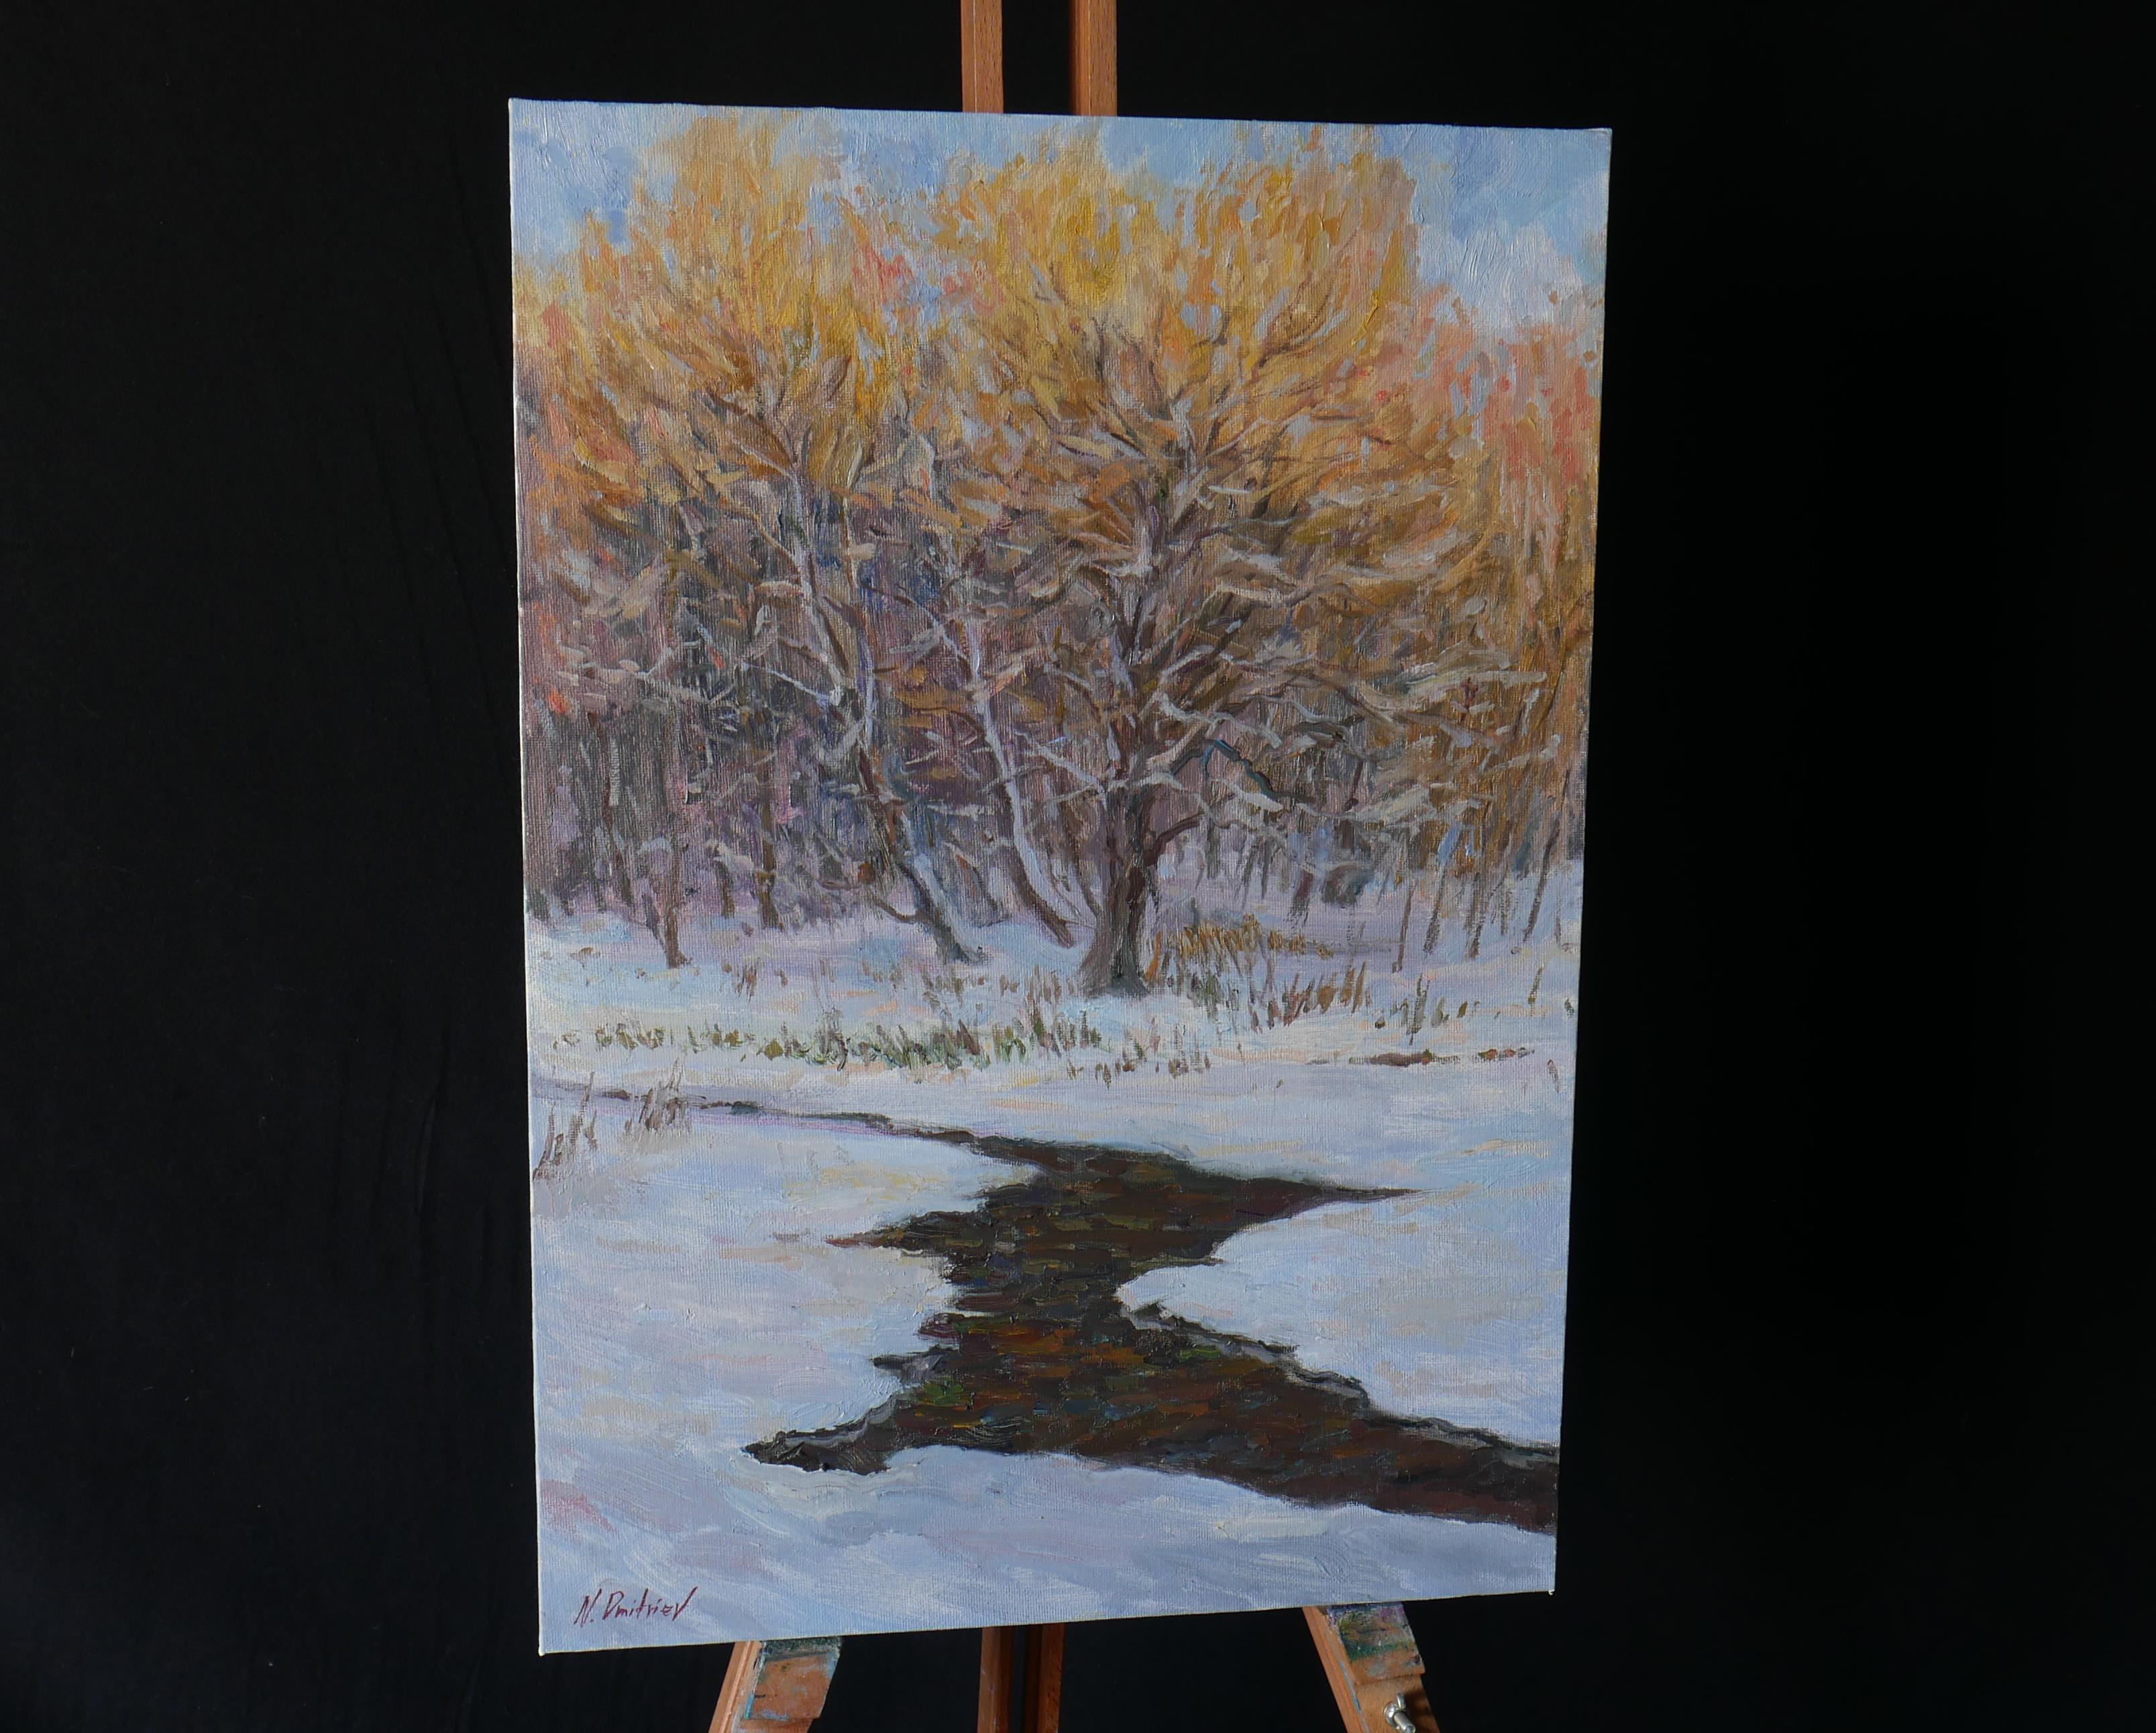 The Latest Touches Of The Winter Sun - Winter- Flusslandschaftsgemälde – Painting von Nikolay Dmitriev